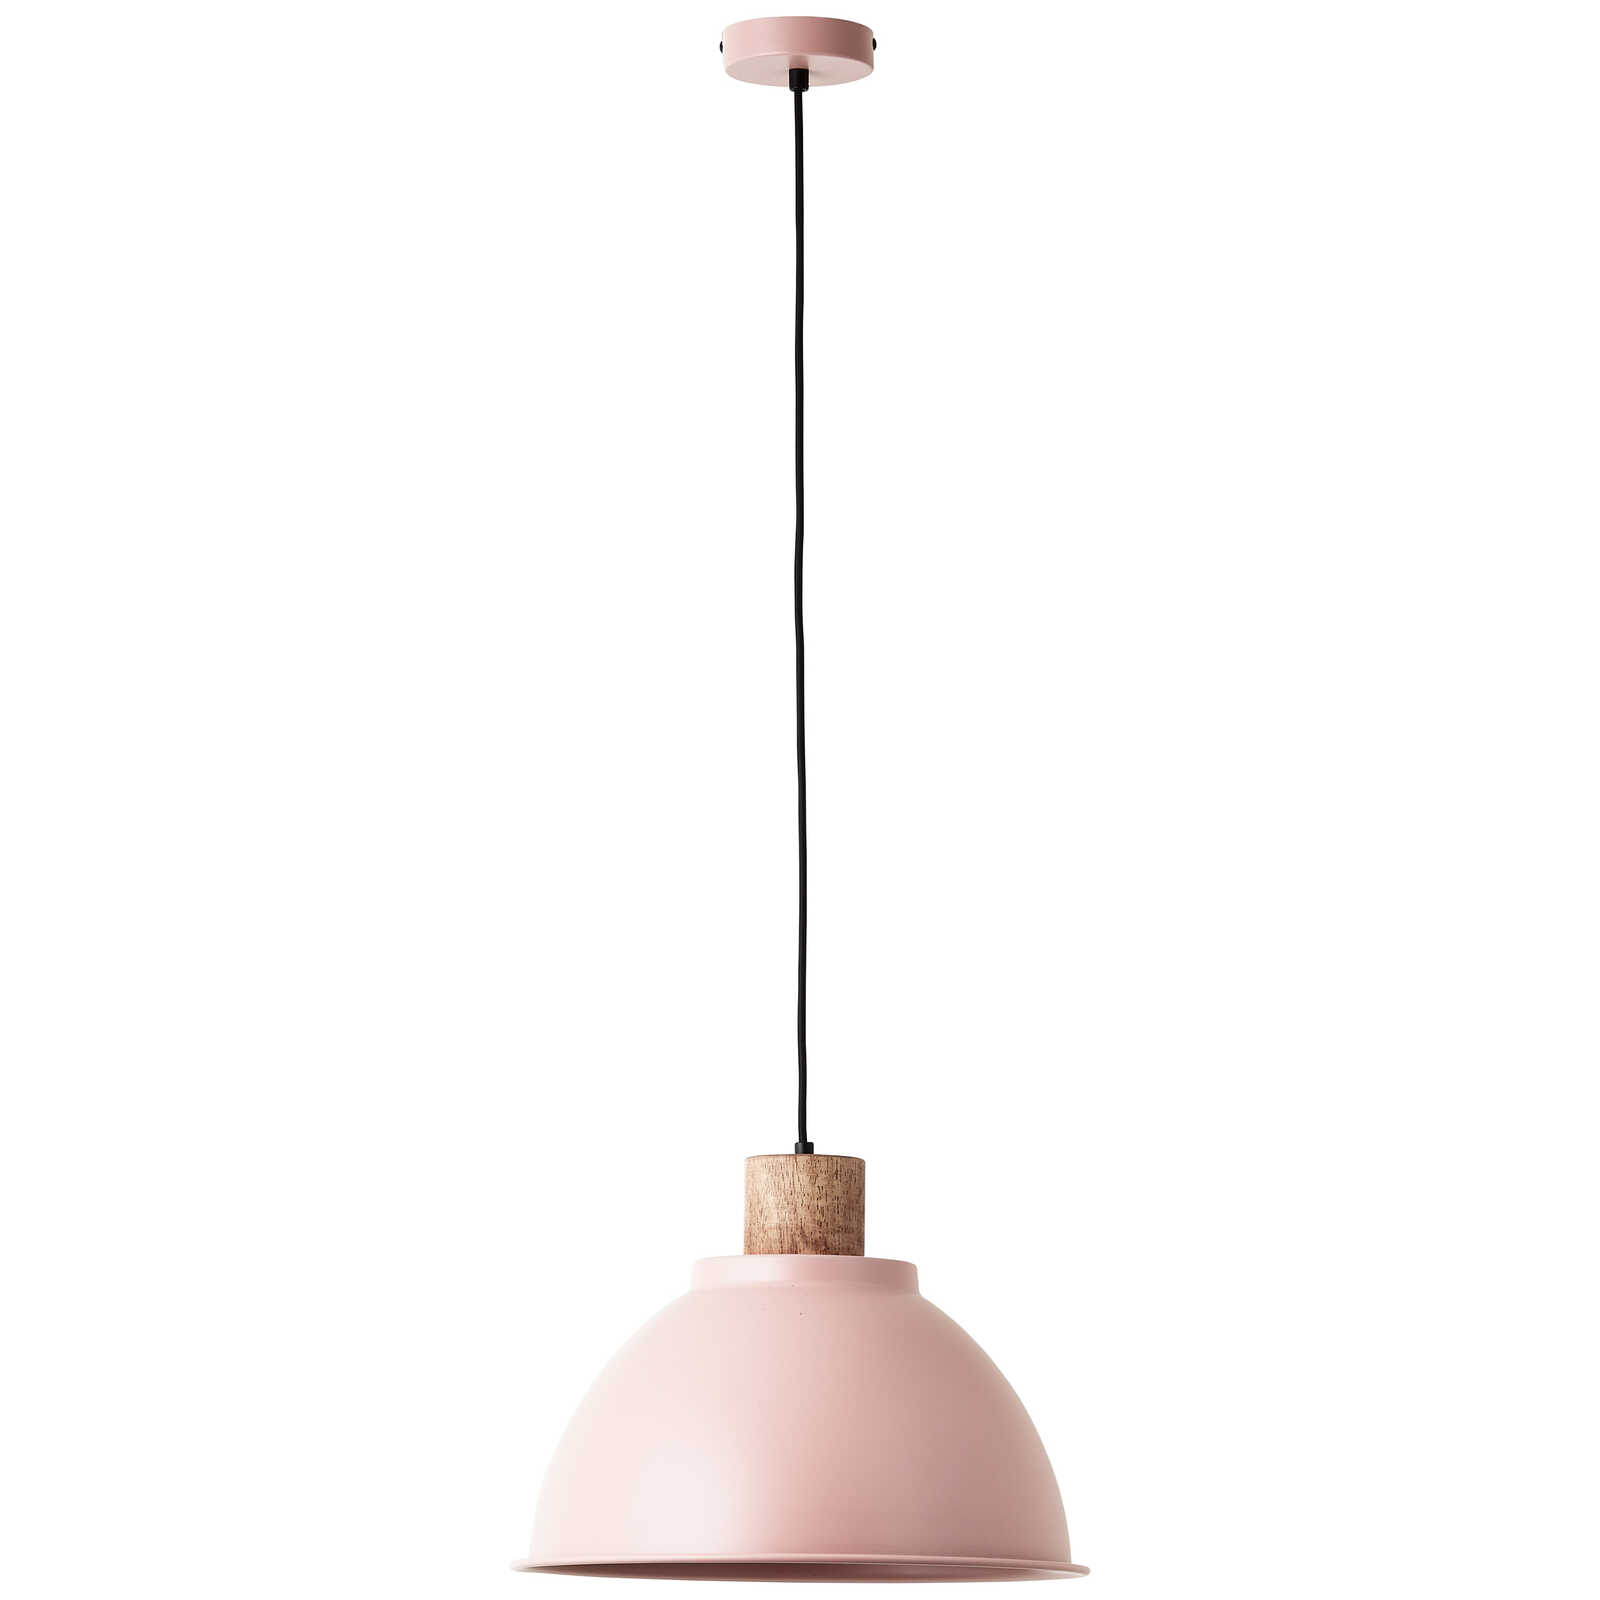             Wooden pendant light - Franziska 10 - Pink
        